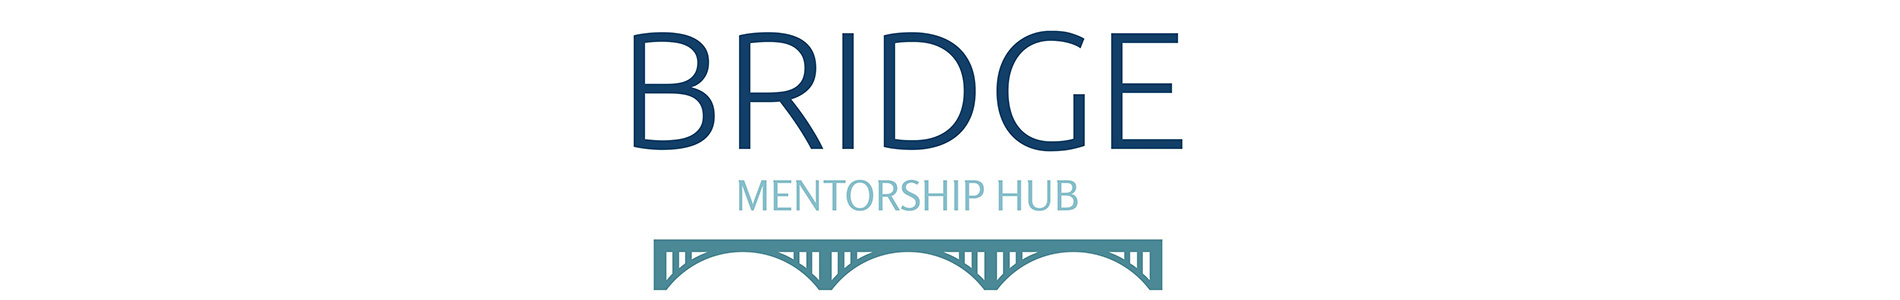 Bridge Mentorship Hub